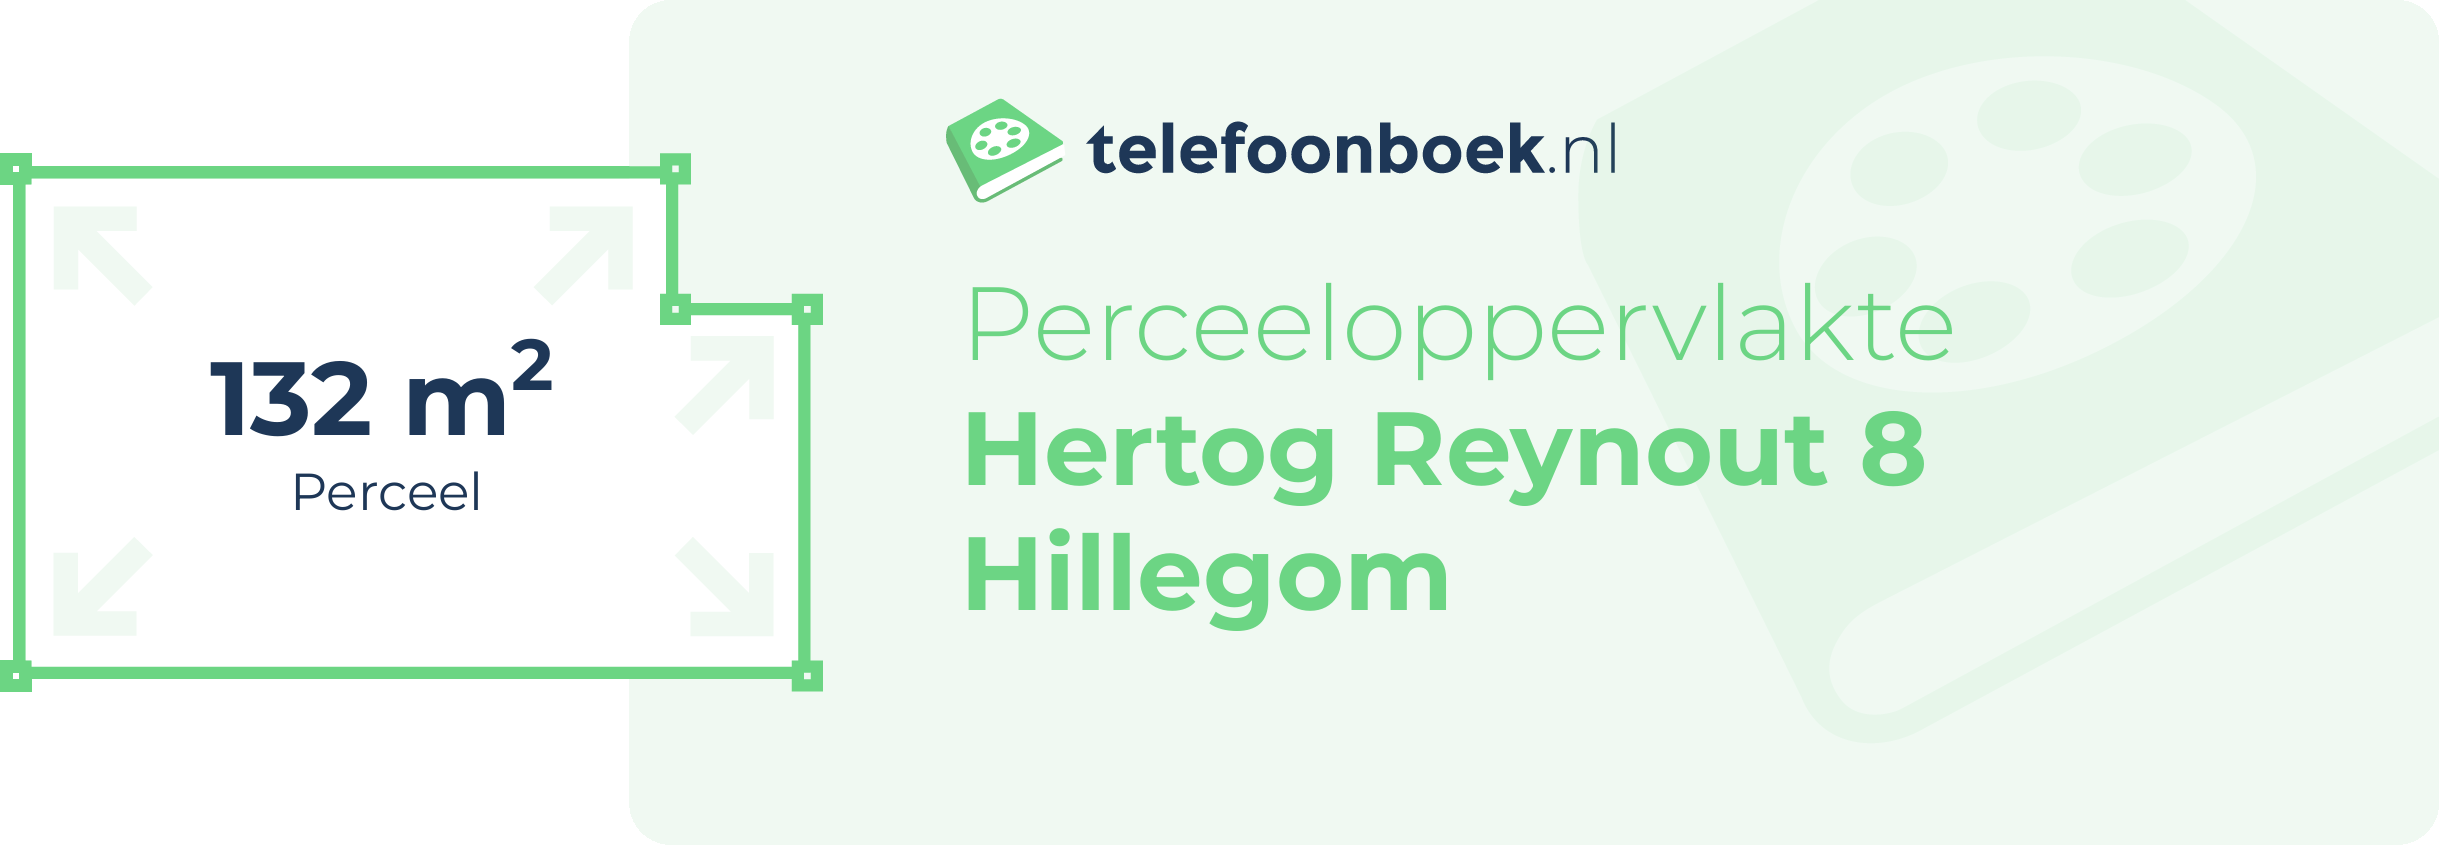 Perceeloppervlakte Hertog Reynout 8 Hillegom